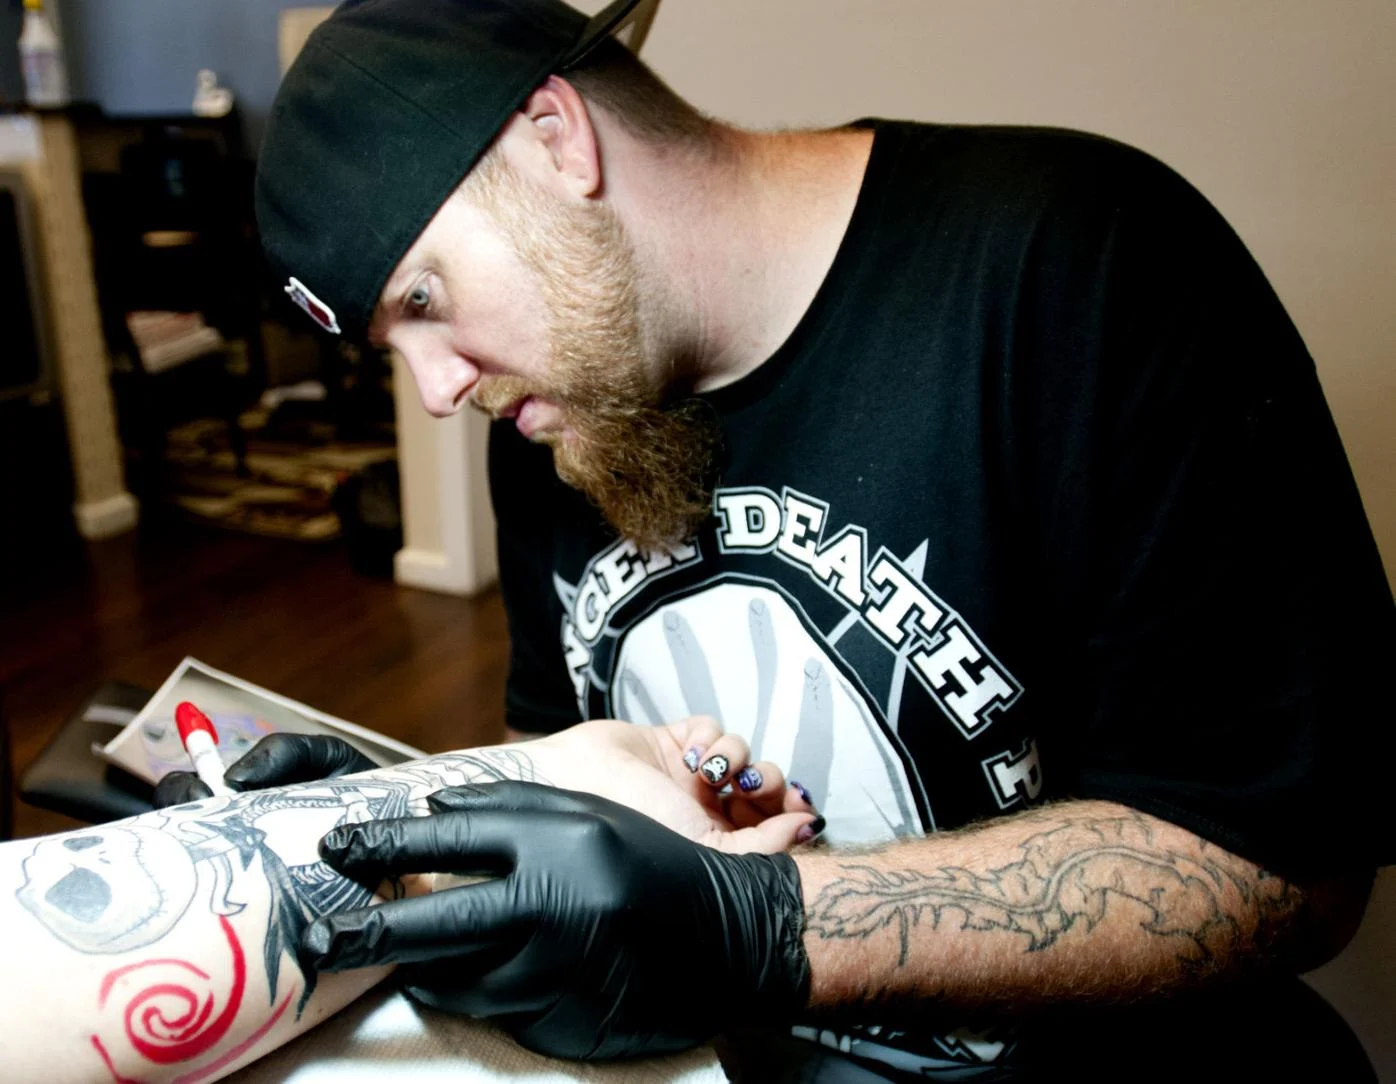 Tattoos are mainstream 10 years after South Carolina lifts ban